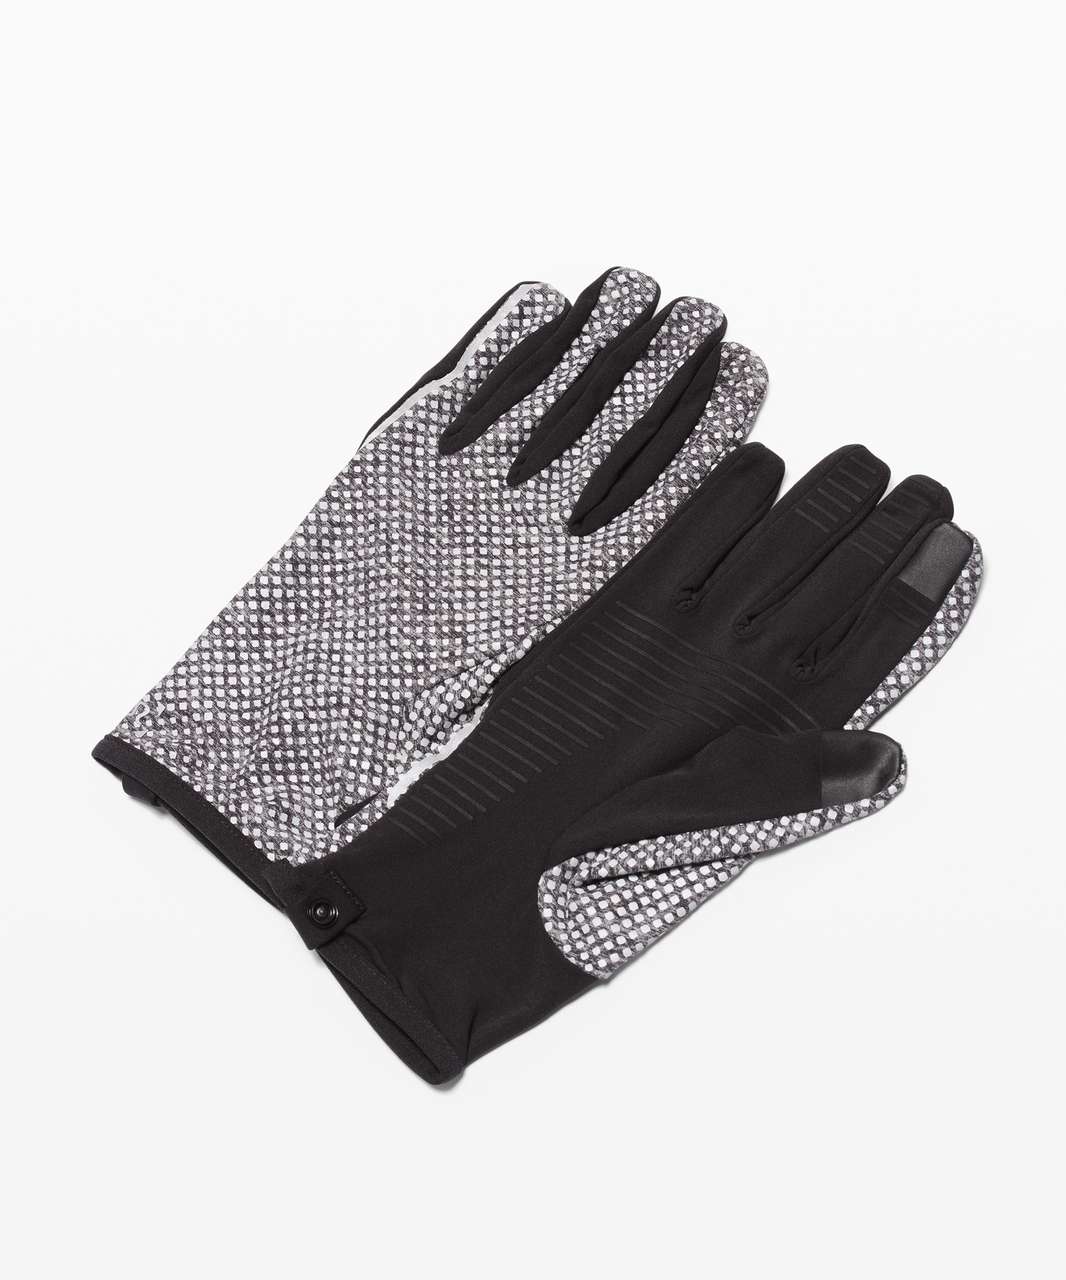 Lululemon Resolute Runner Gloves - Geo Camo Heathered Black Silver Reflective / Black